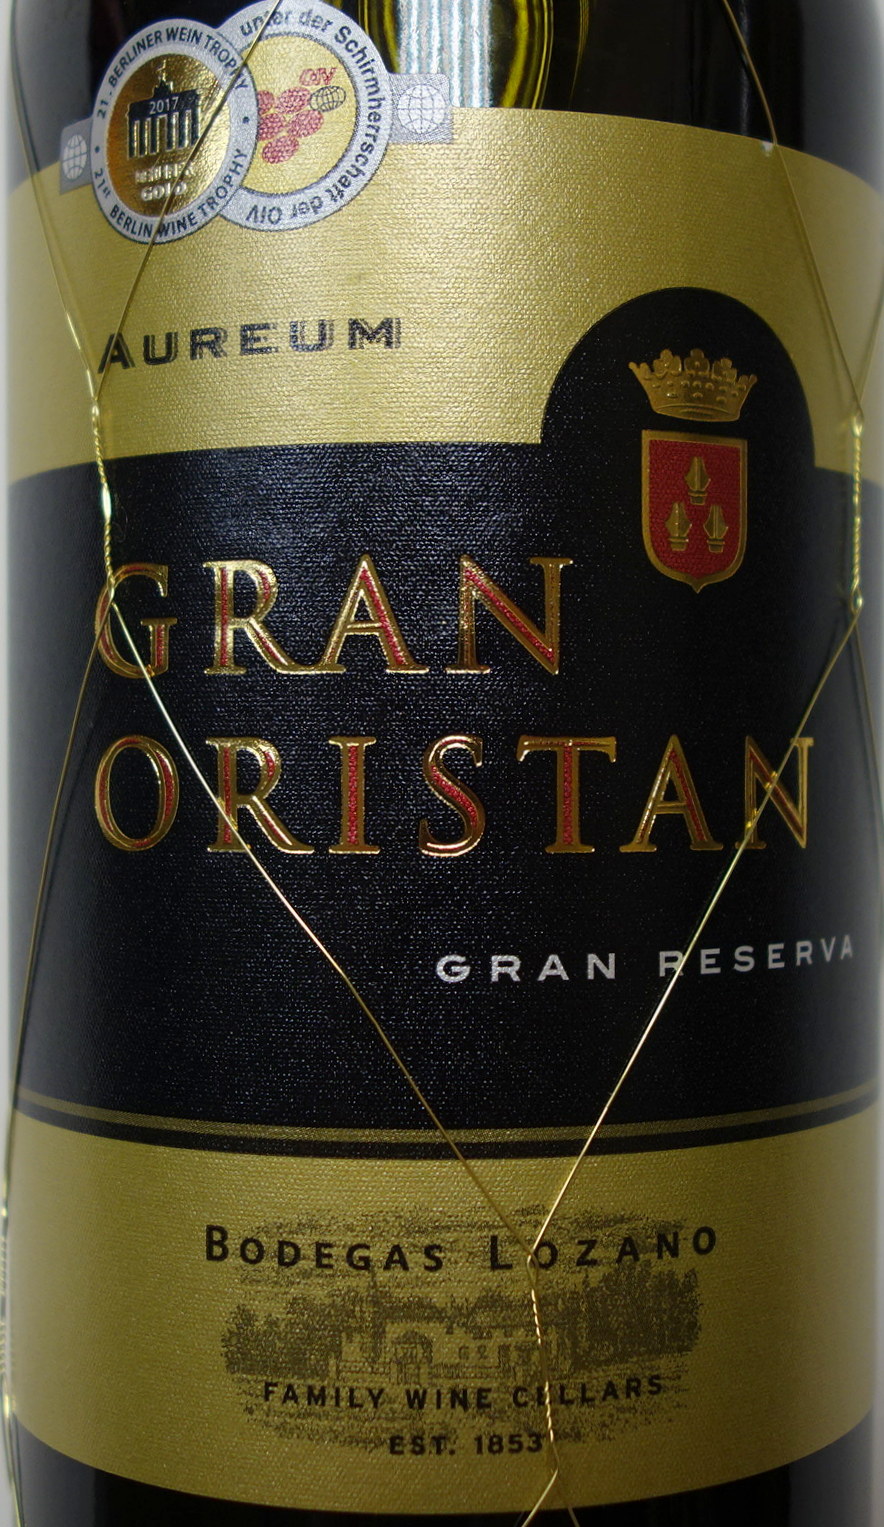 Reserva Gran Mancha online Aureum Gran bestellen La D.O. Shop | Oristan Wein kaufen |